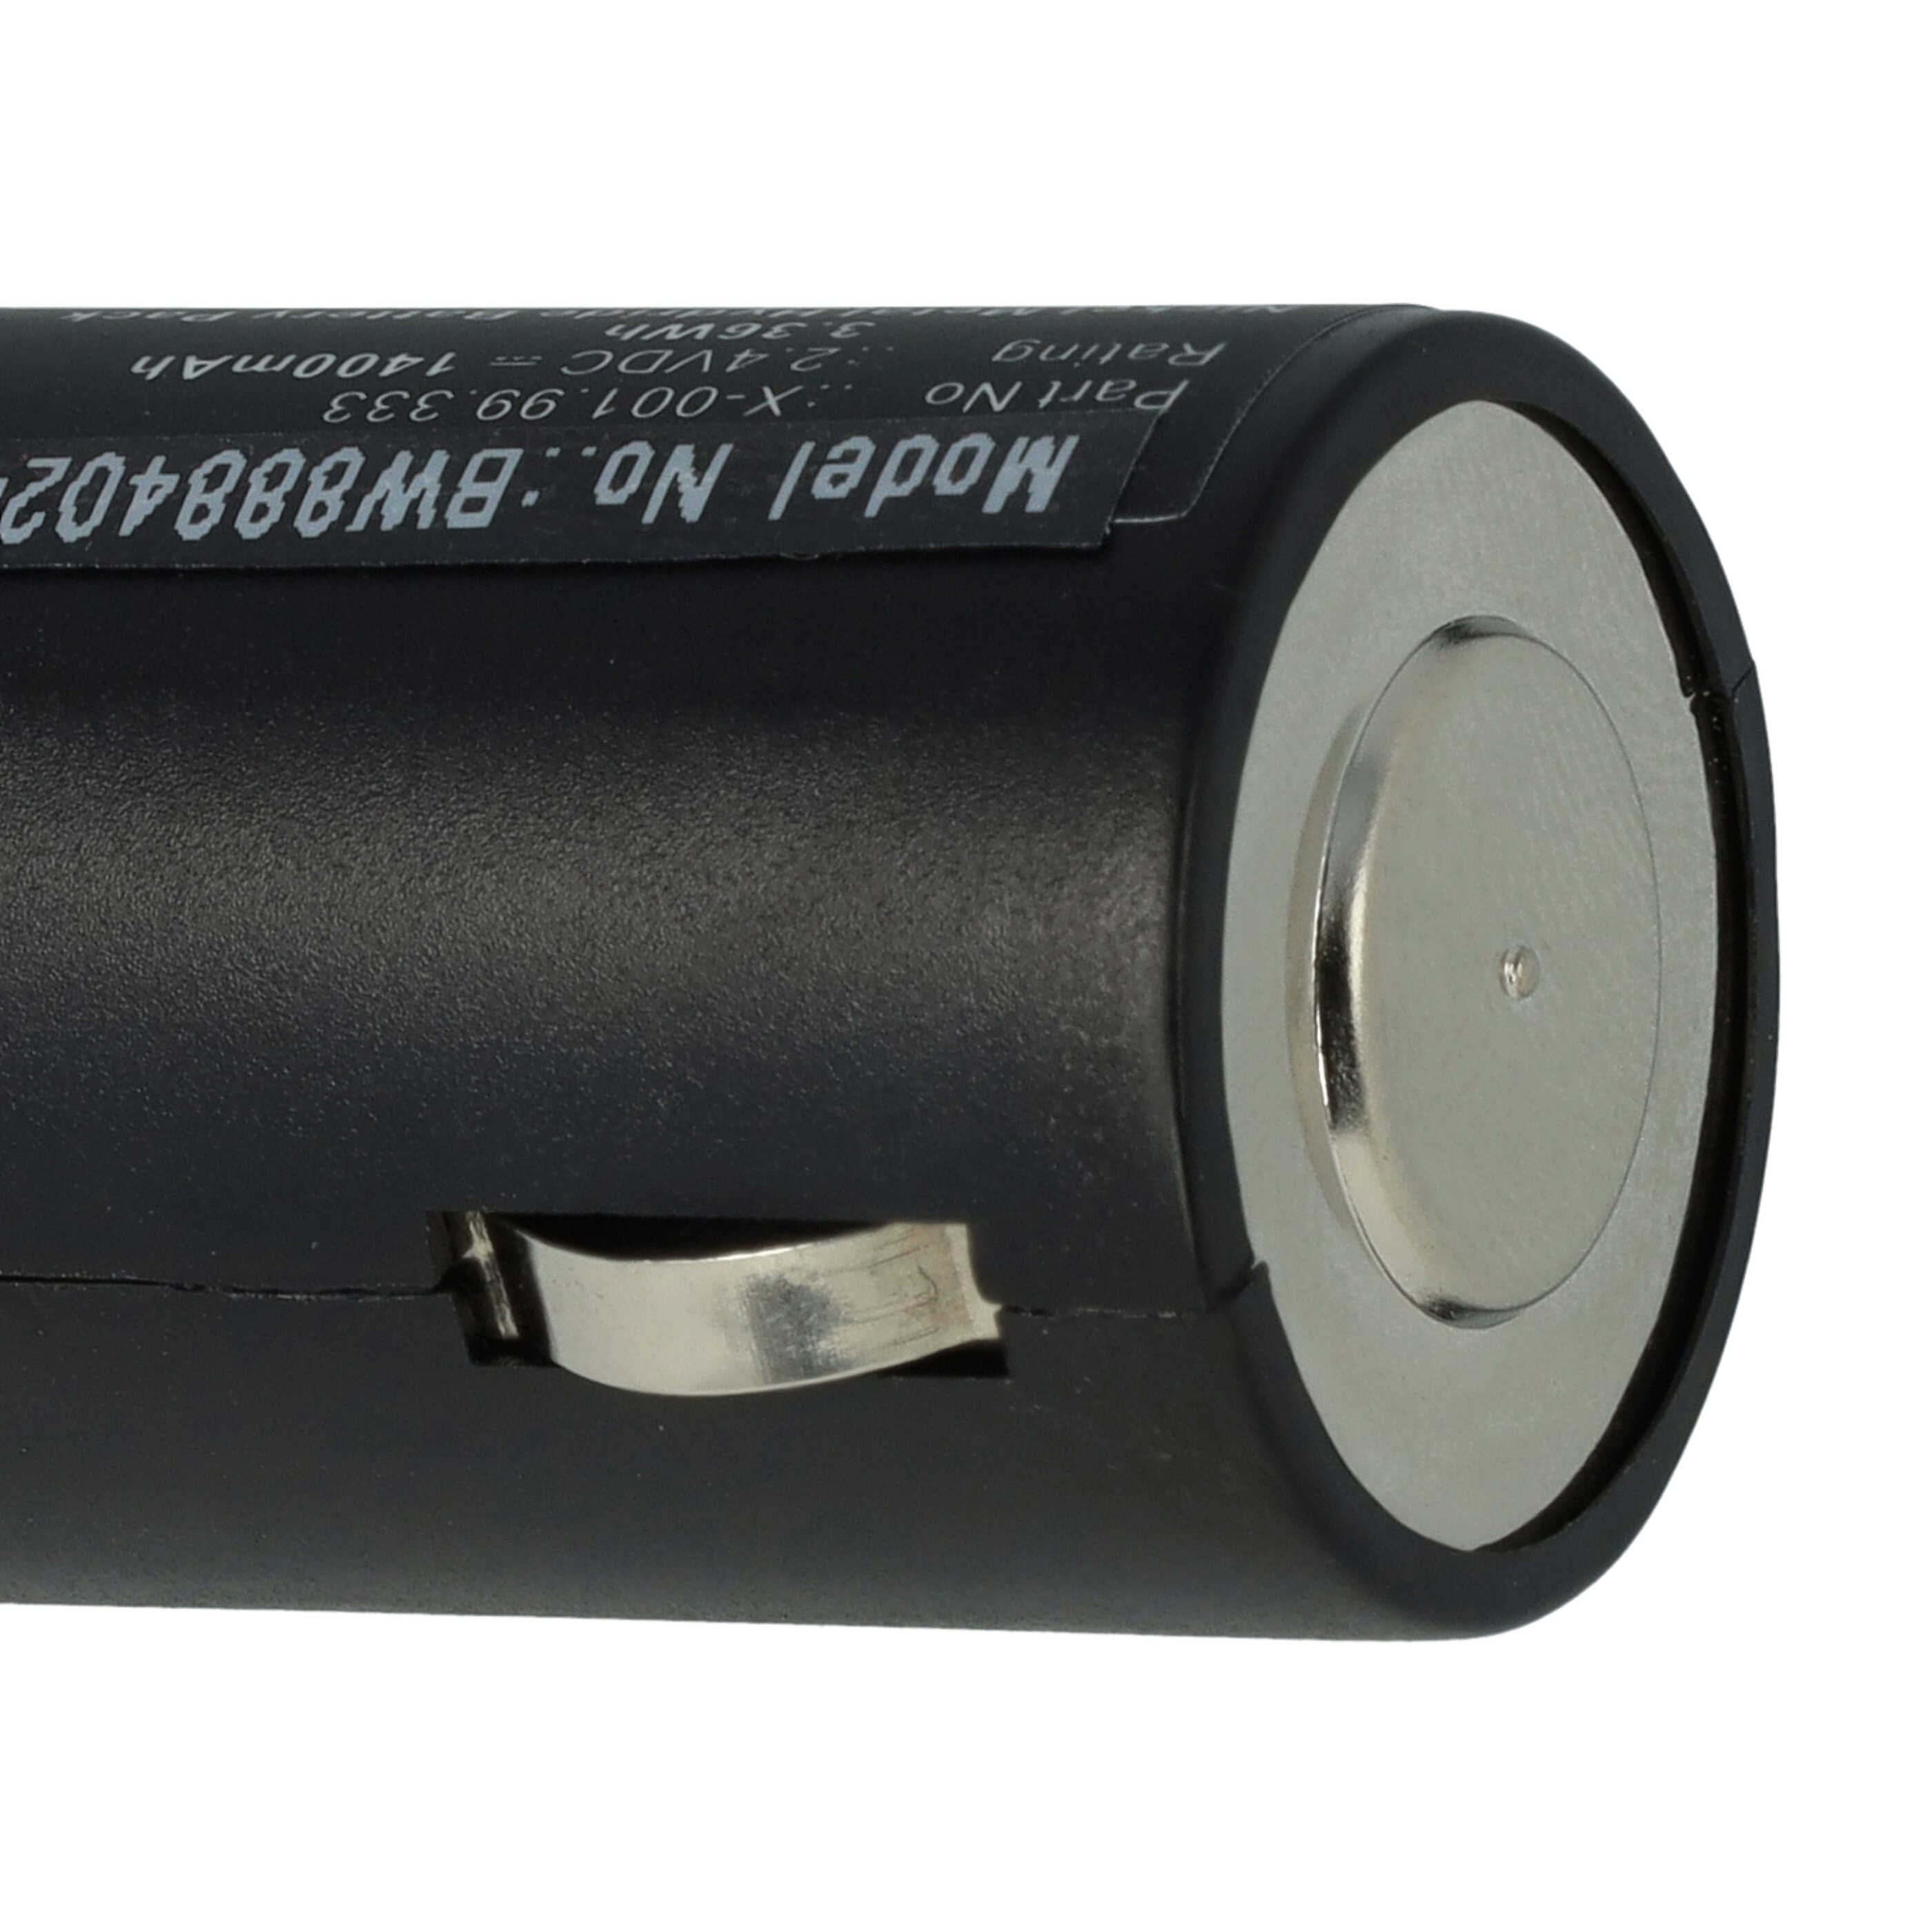 Akumulator zamiennik Heine X-001.99.333 - 1400 mAh 2,4 V NiMH